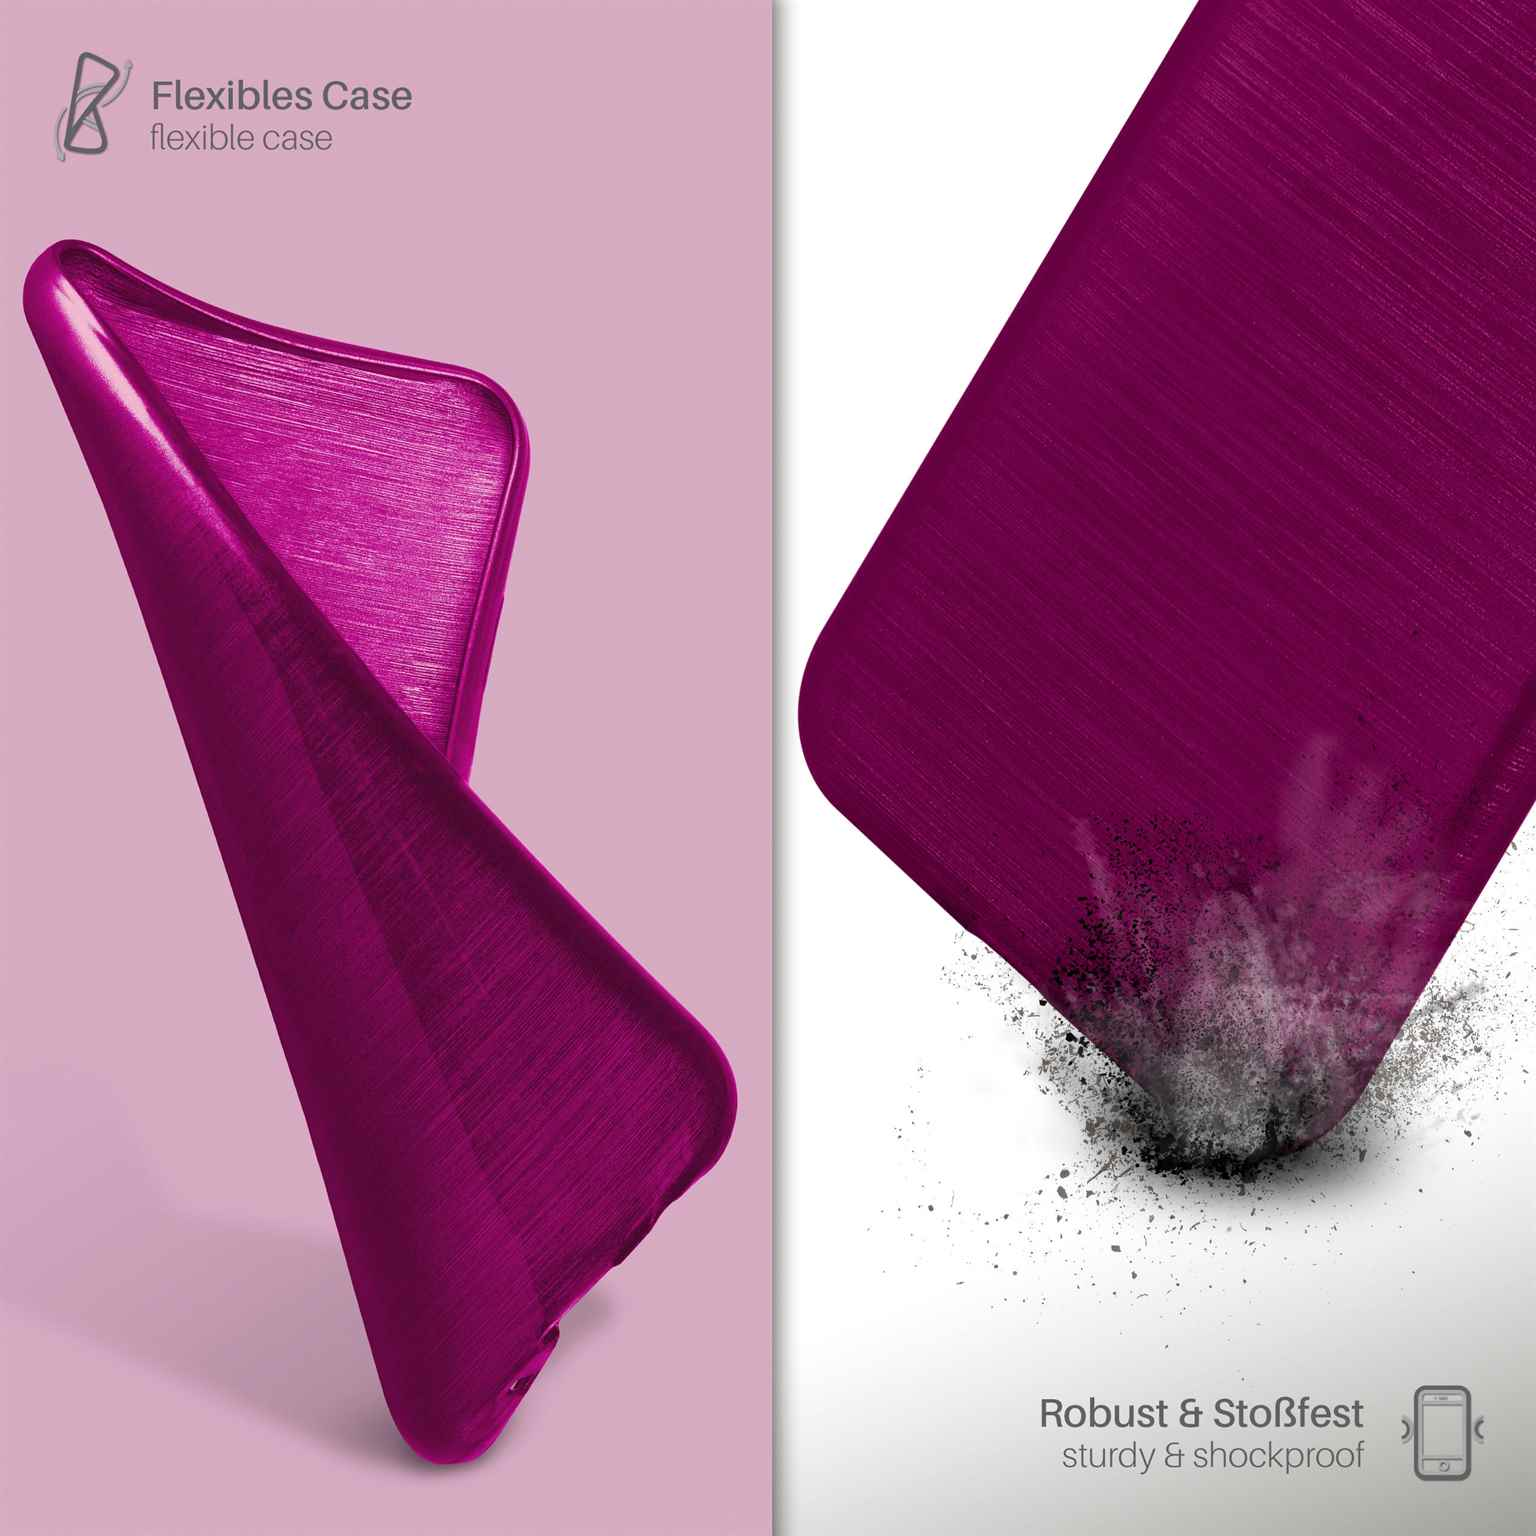 Backcover, Case, Brushed LG, L65, Purpure-Purple MOEX